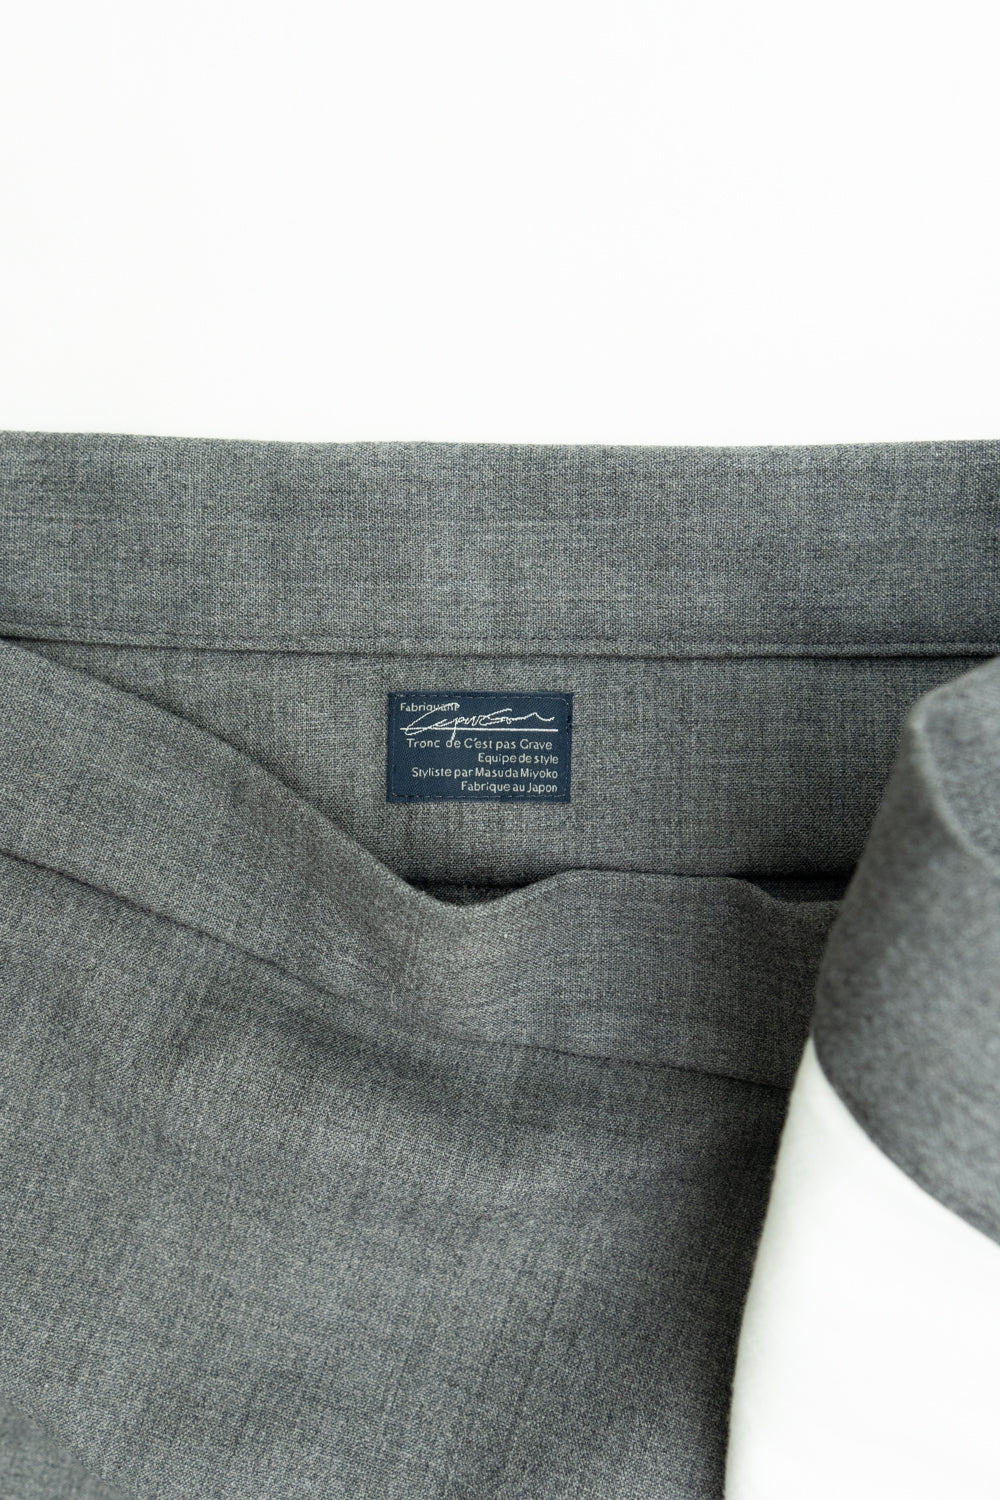 CASE2-gray tie